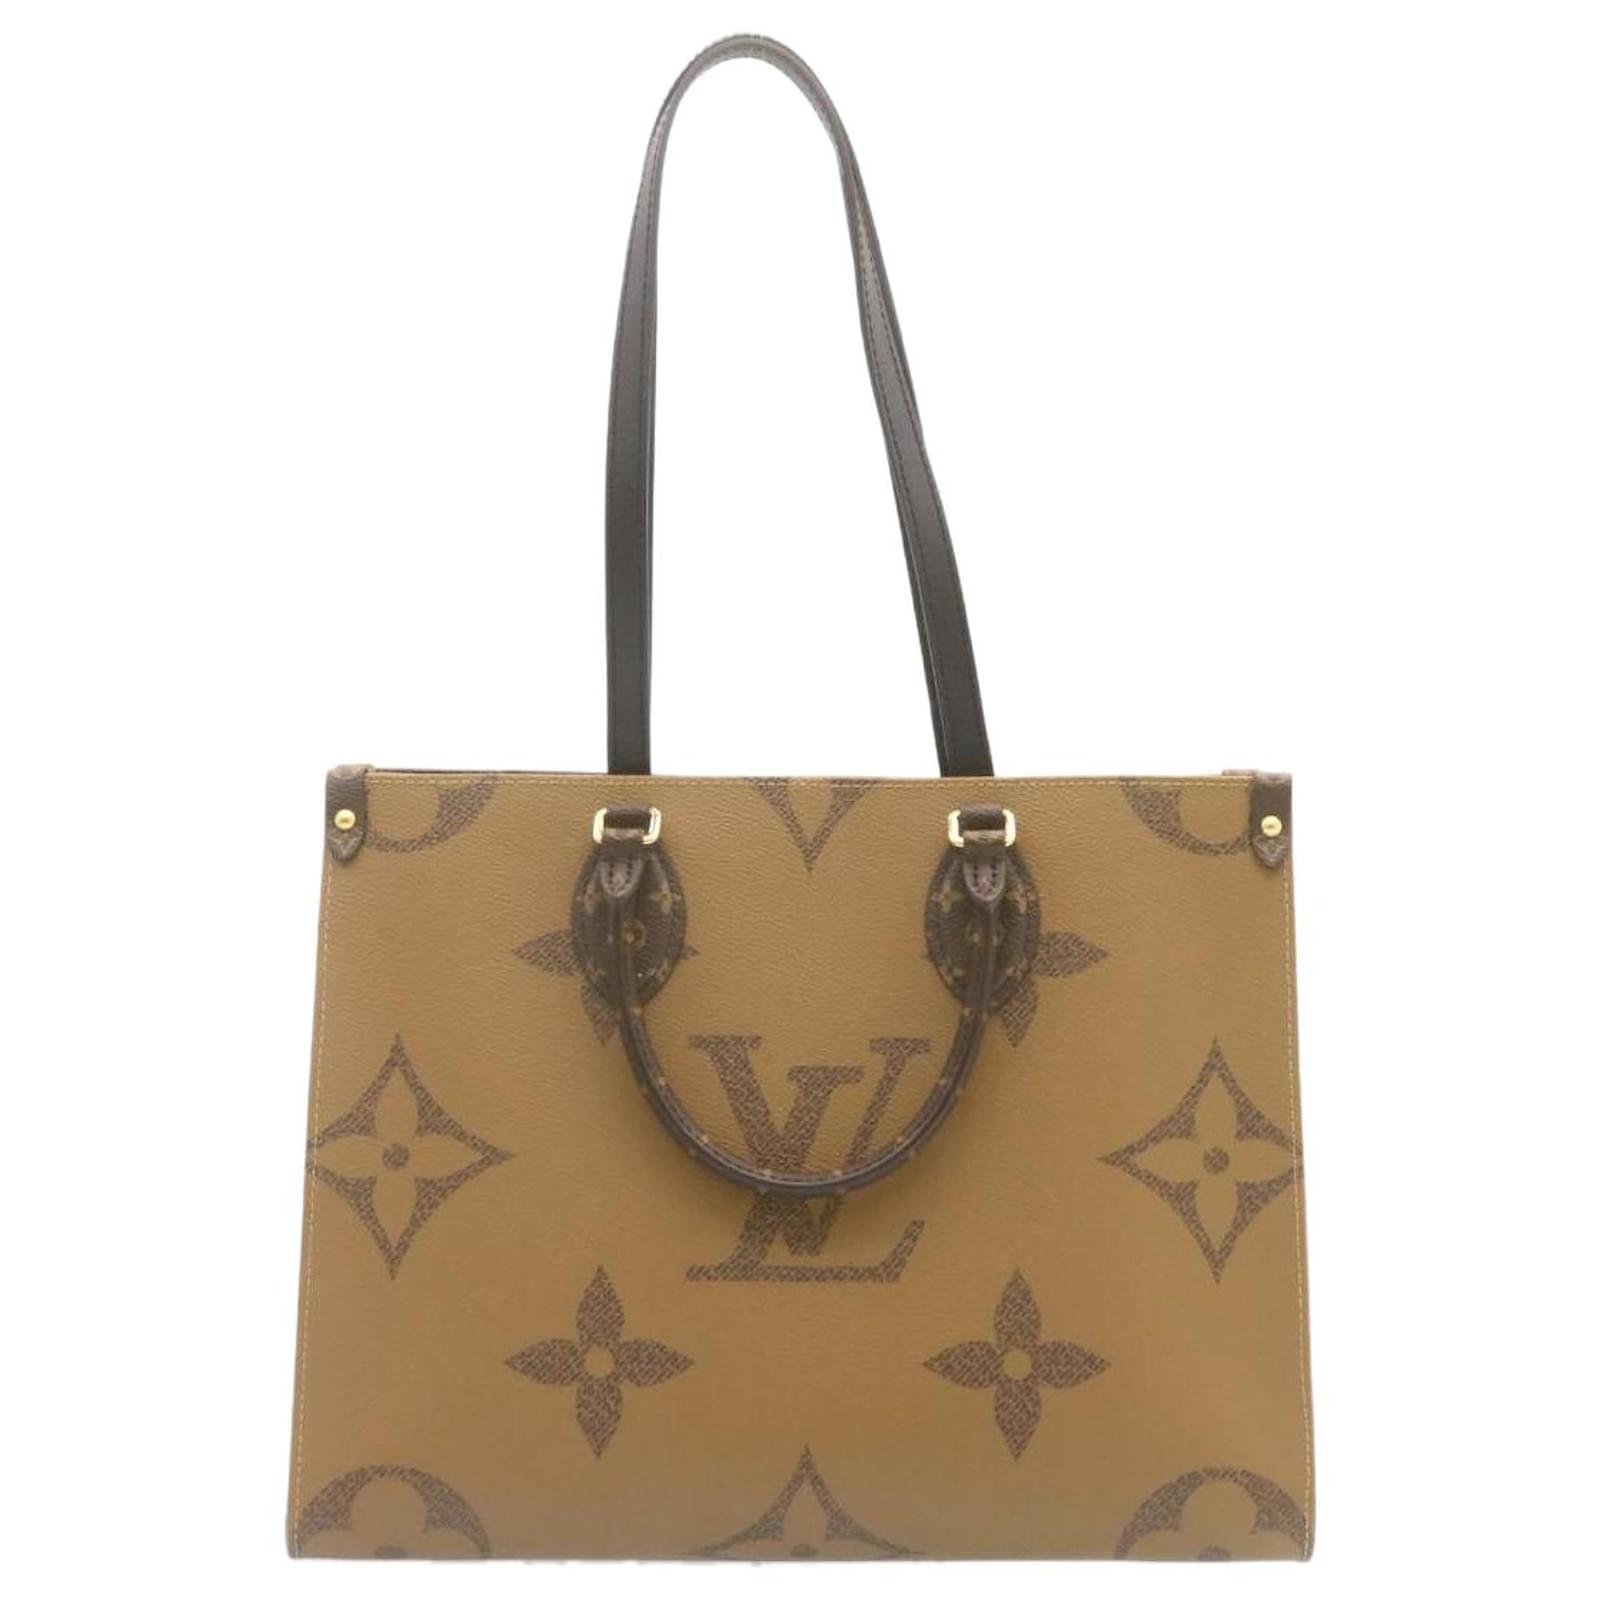 Louis Vuitton OnTheGo tote MM Vs GM Bag Size Comparison